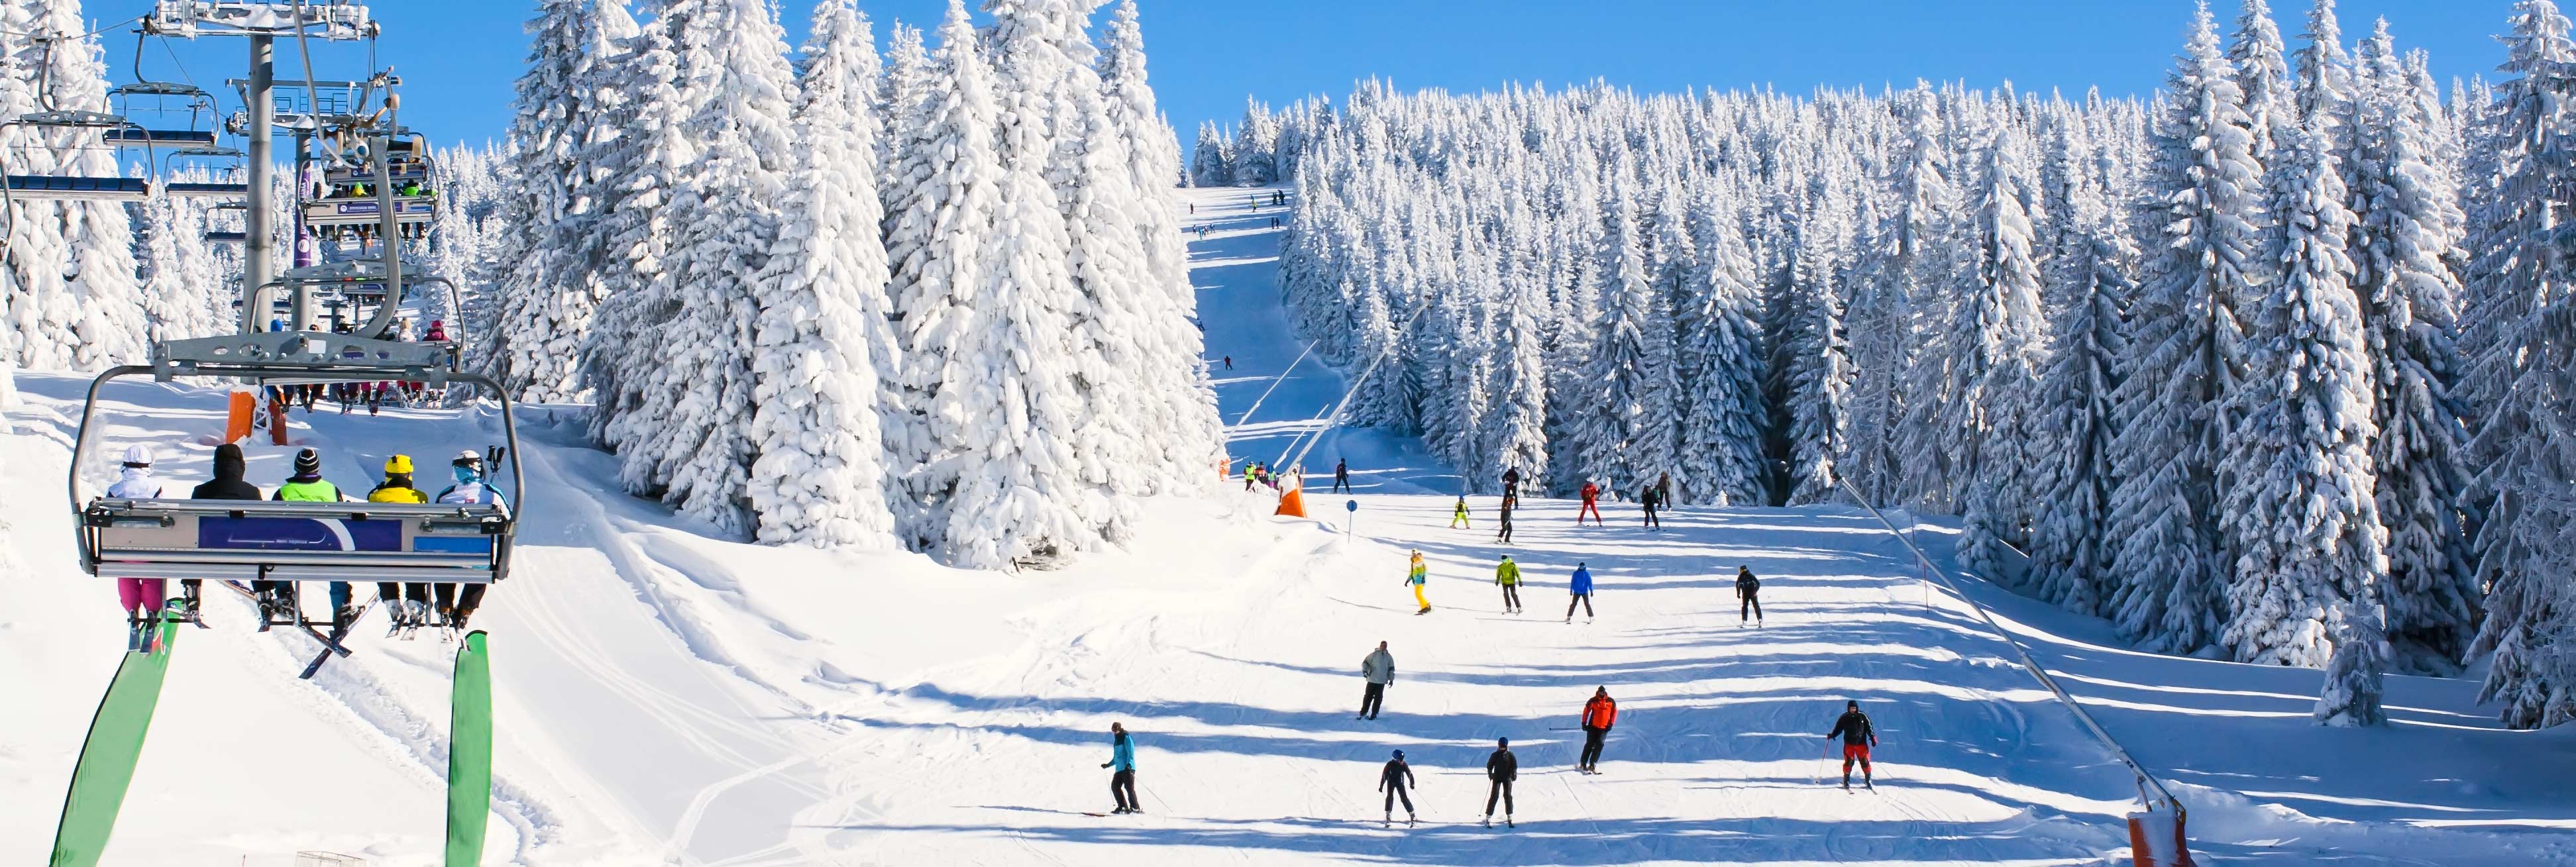 ski-resort-insurance-for-skiers